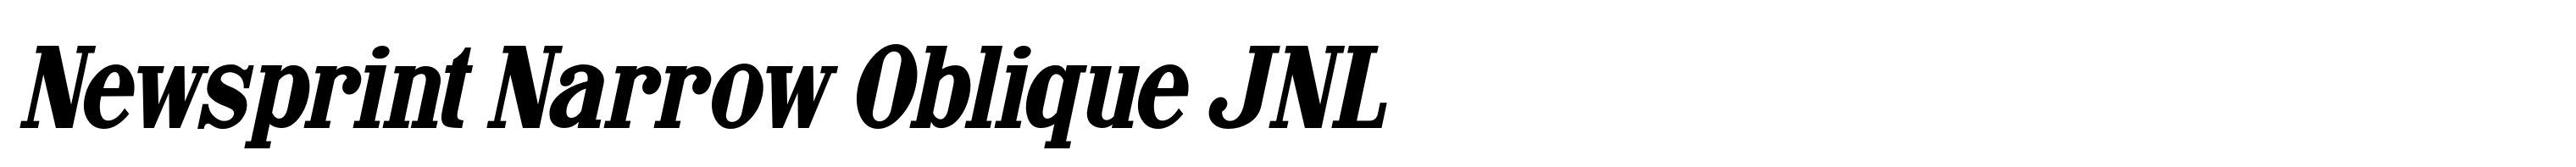 Newsprint Narrow Oblique JNL